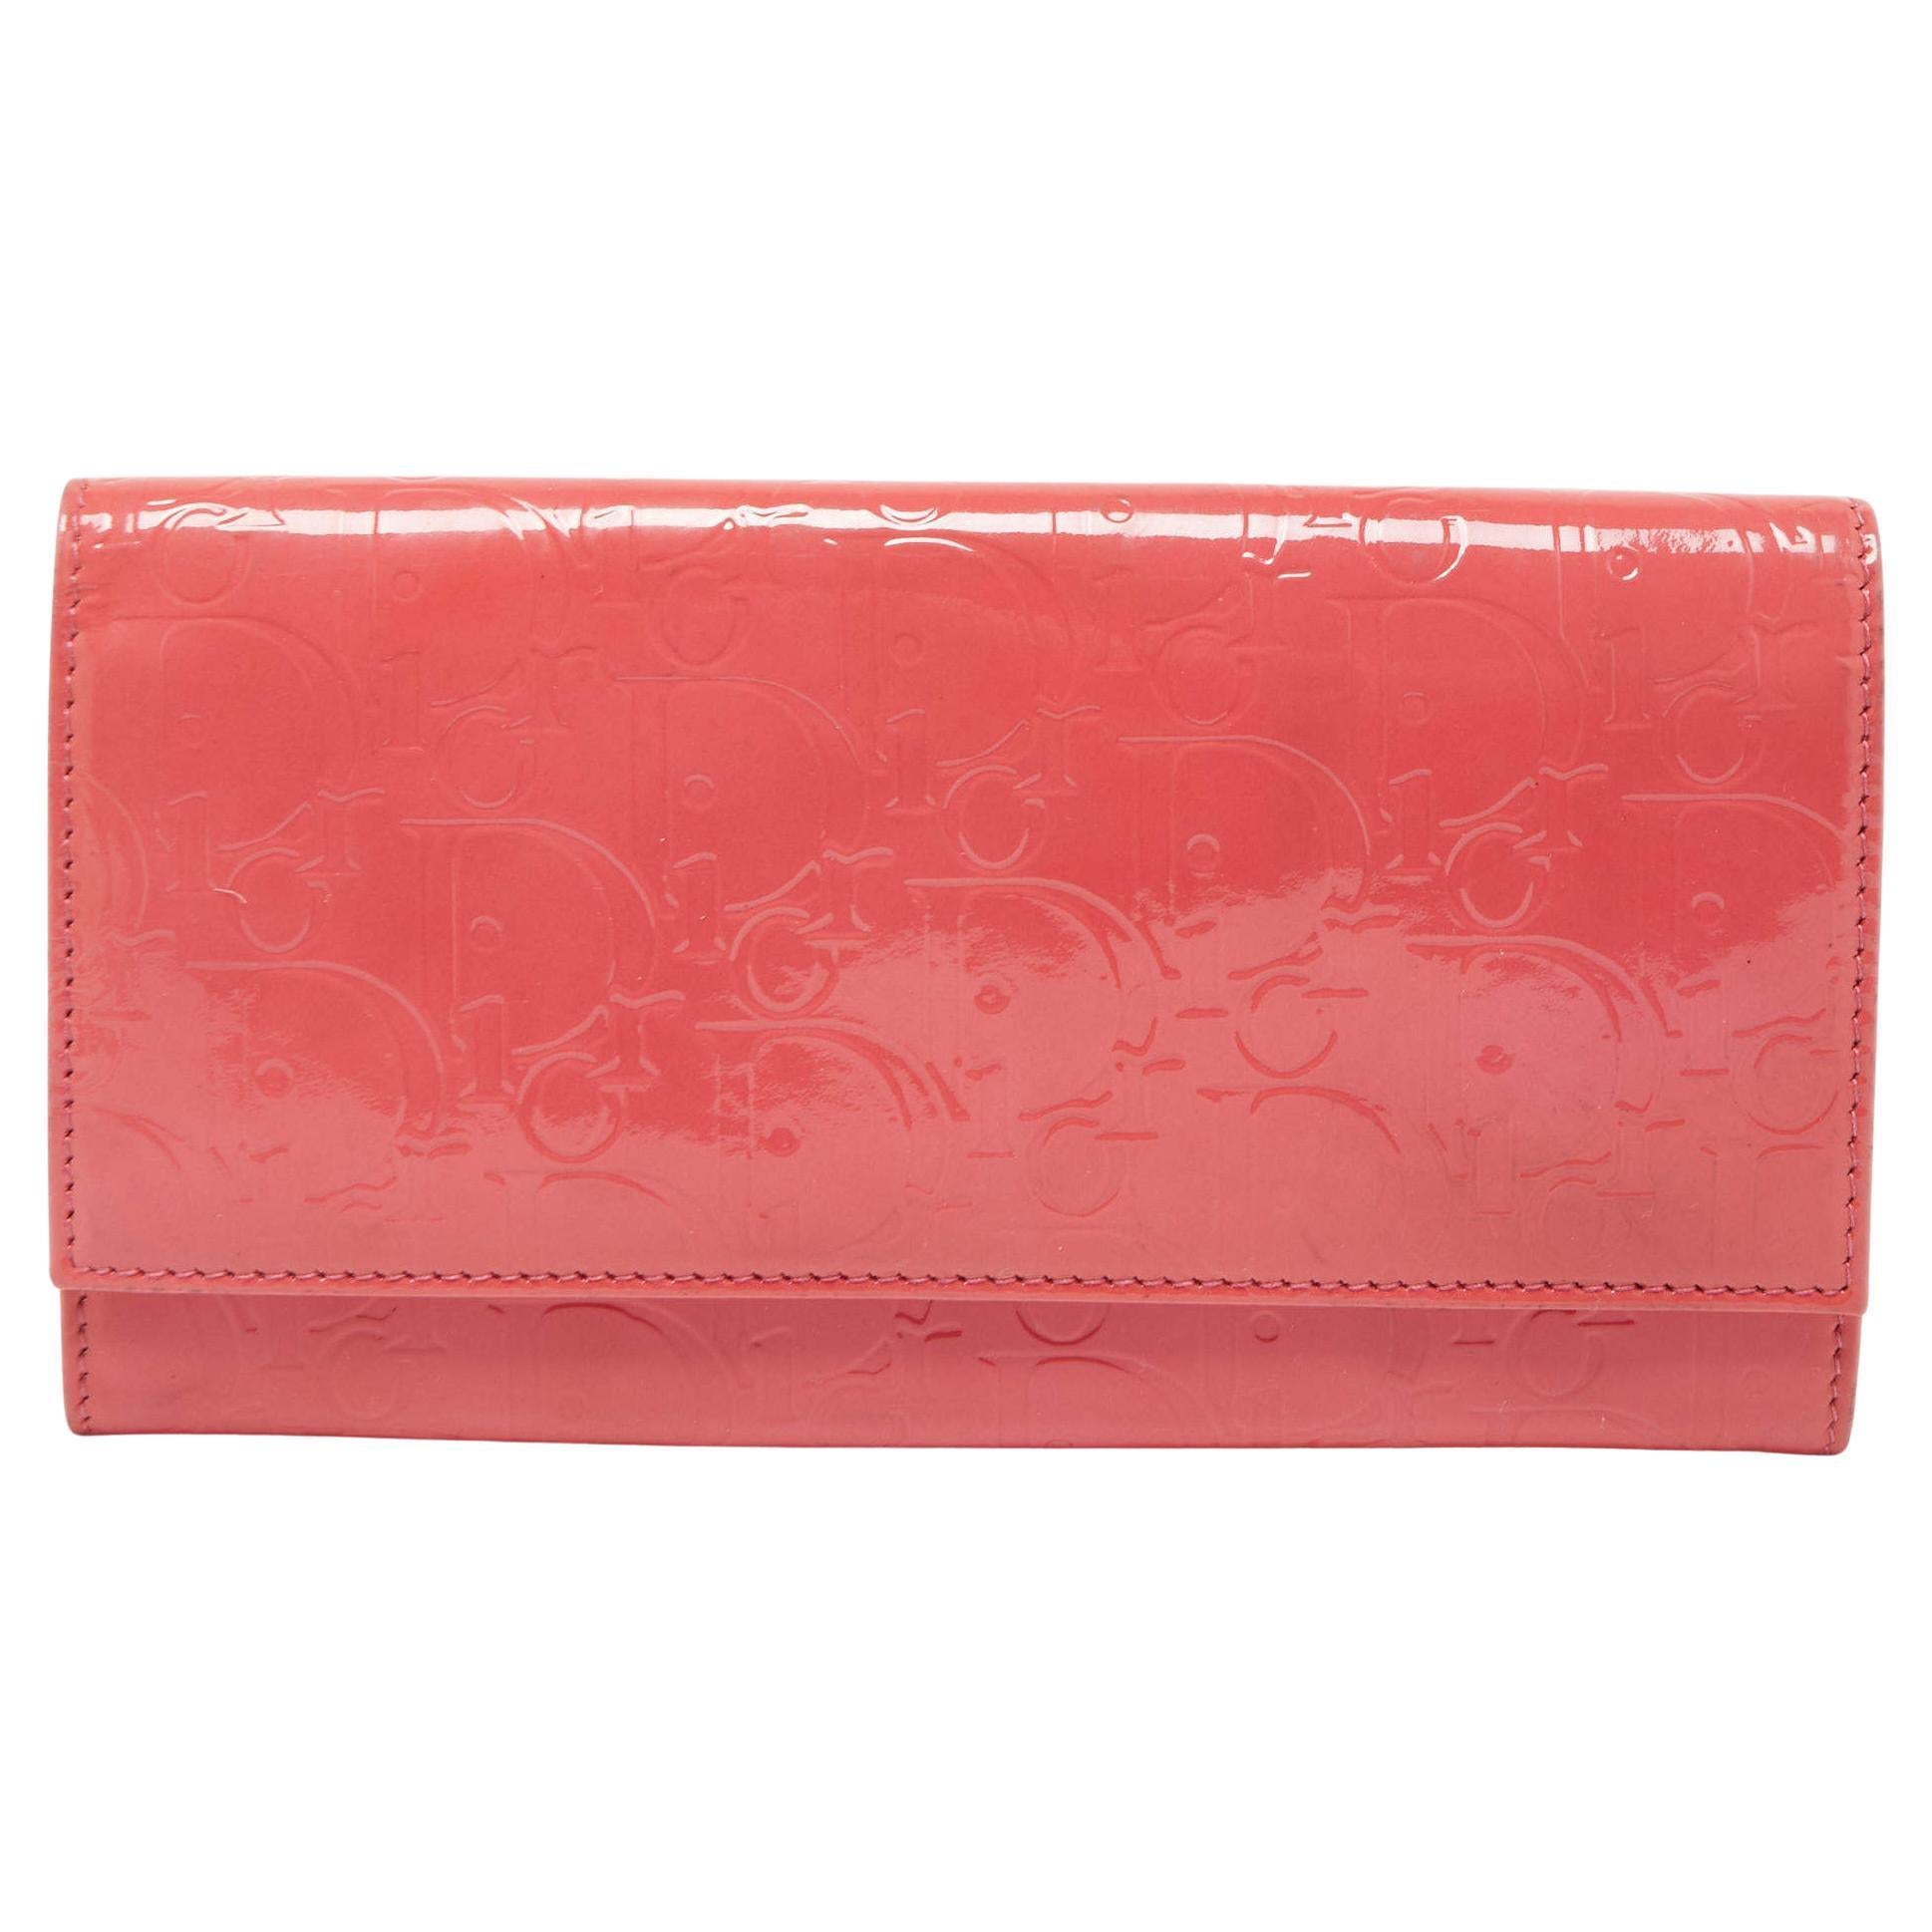 Dior - Portefeuille continental rose oblique en cuir verni embossé en vente